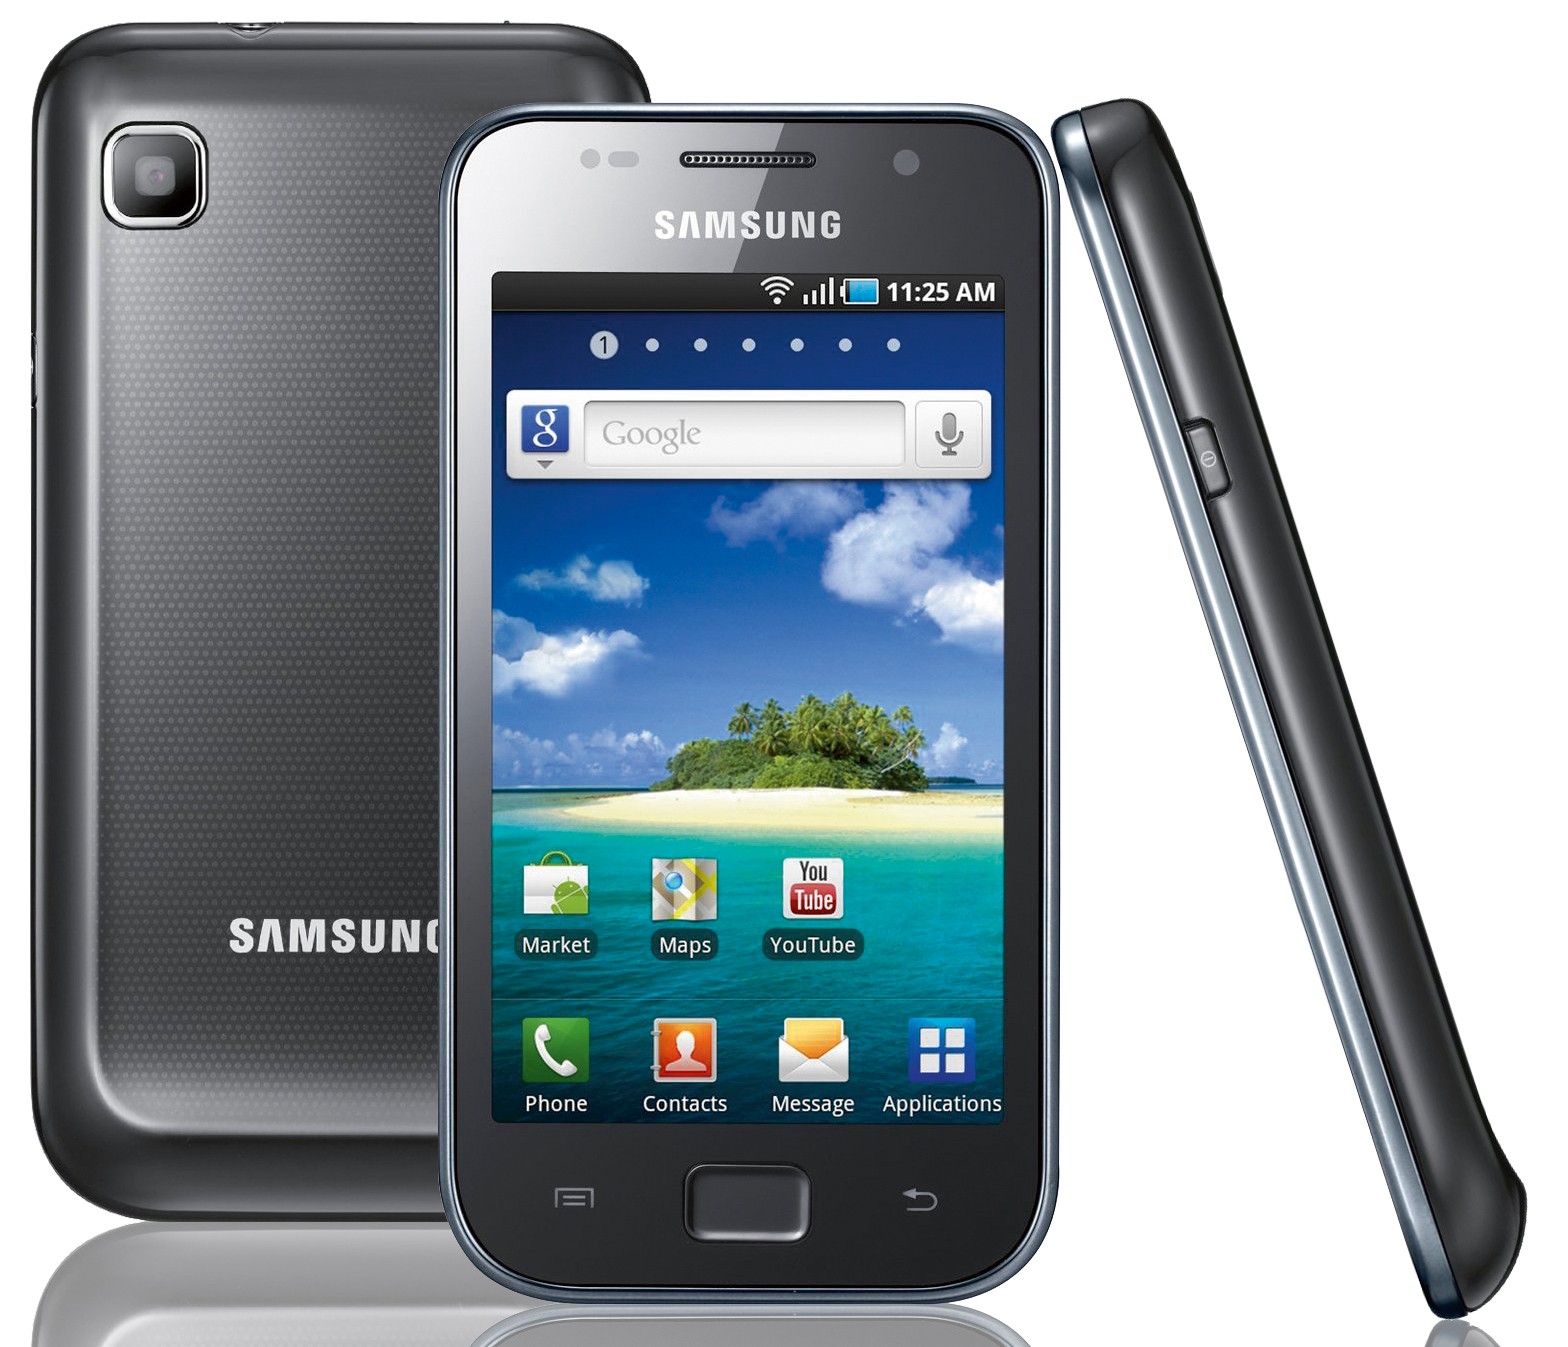 Samsung galaxy gt 3. Самсунг галакси i9003. Samsung Galaxy s gt-i9003. Samsung Galaxy s SCLCD gt-i9003. Samsung gt 9003.